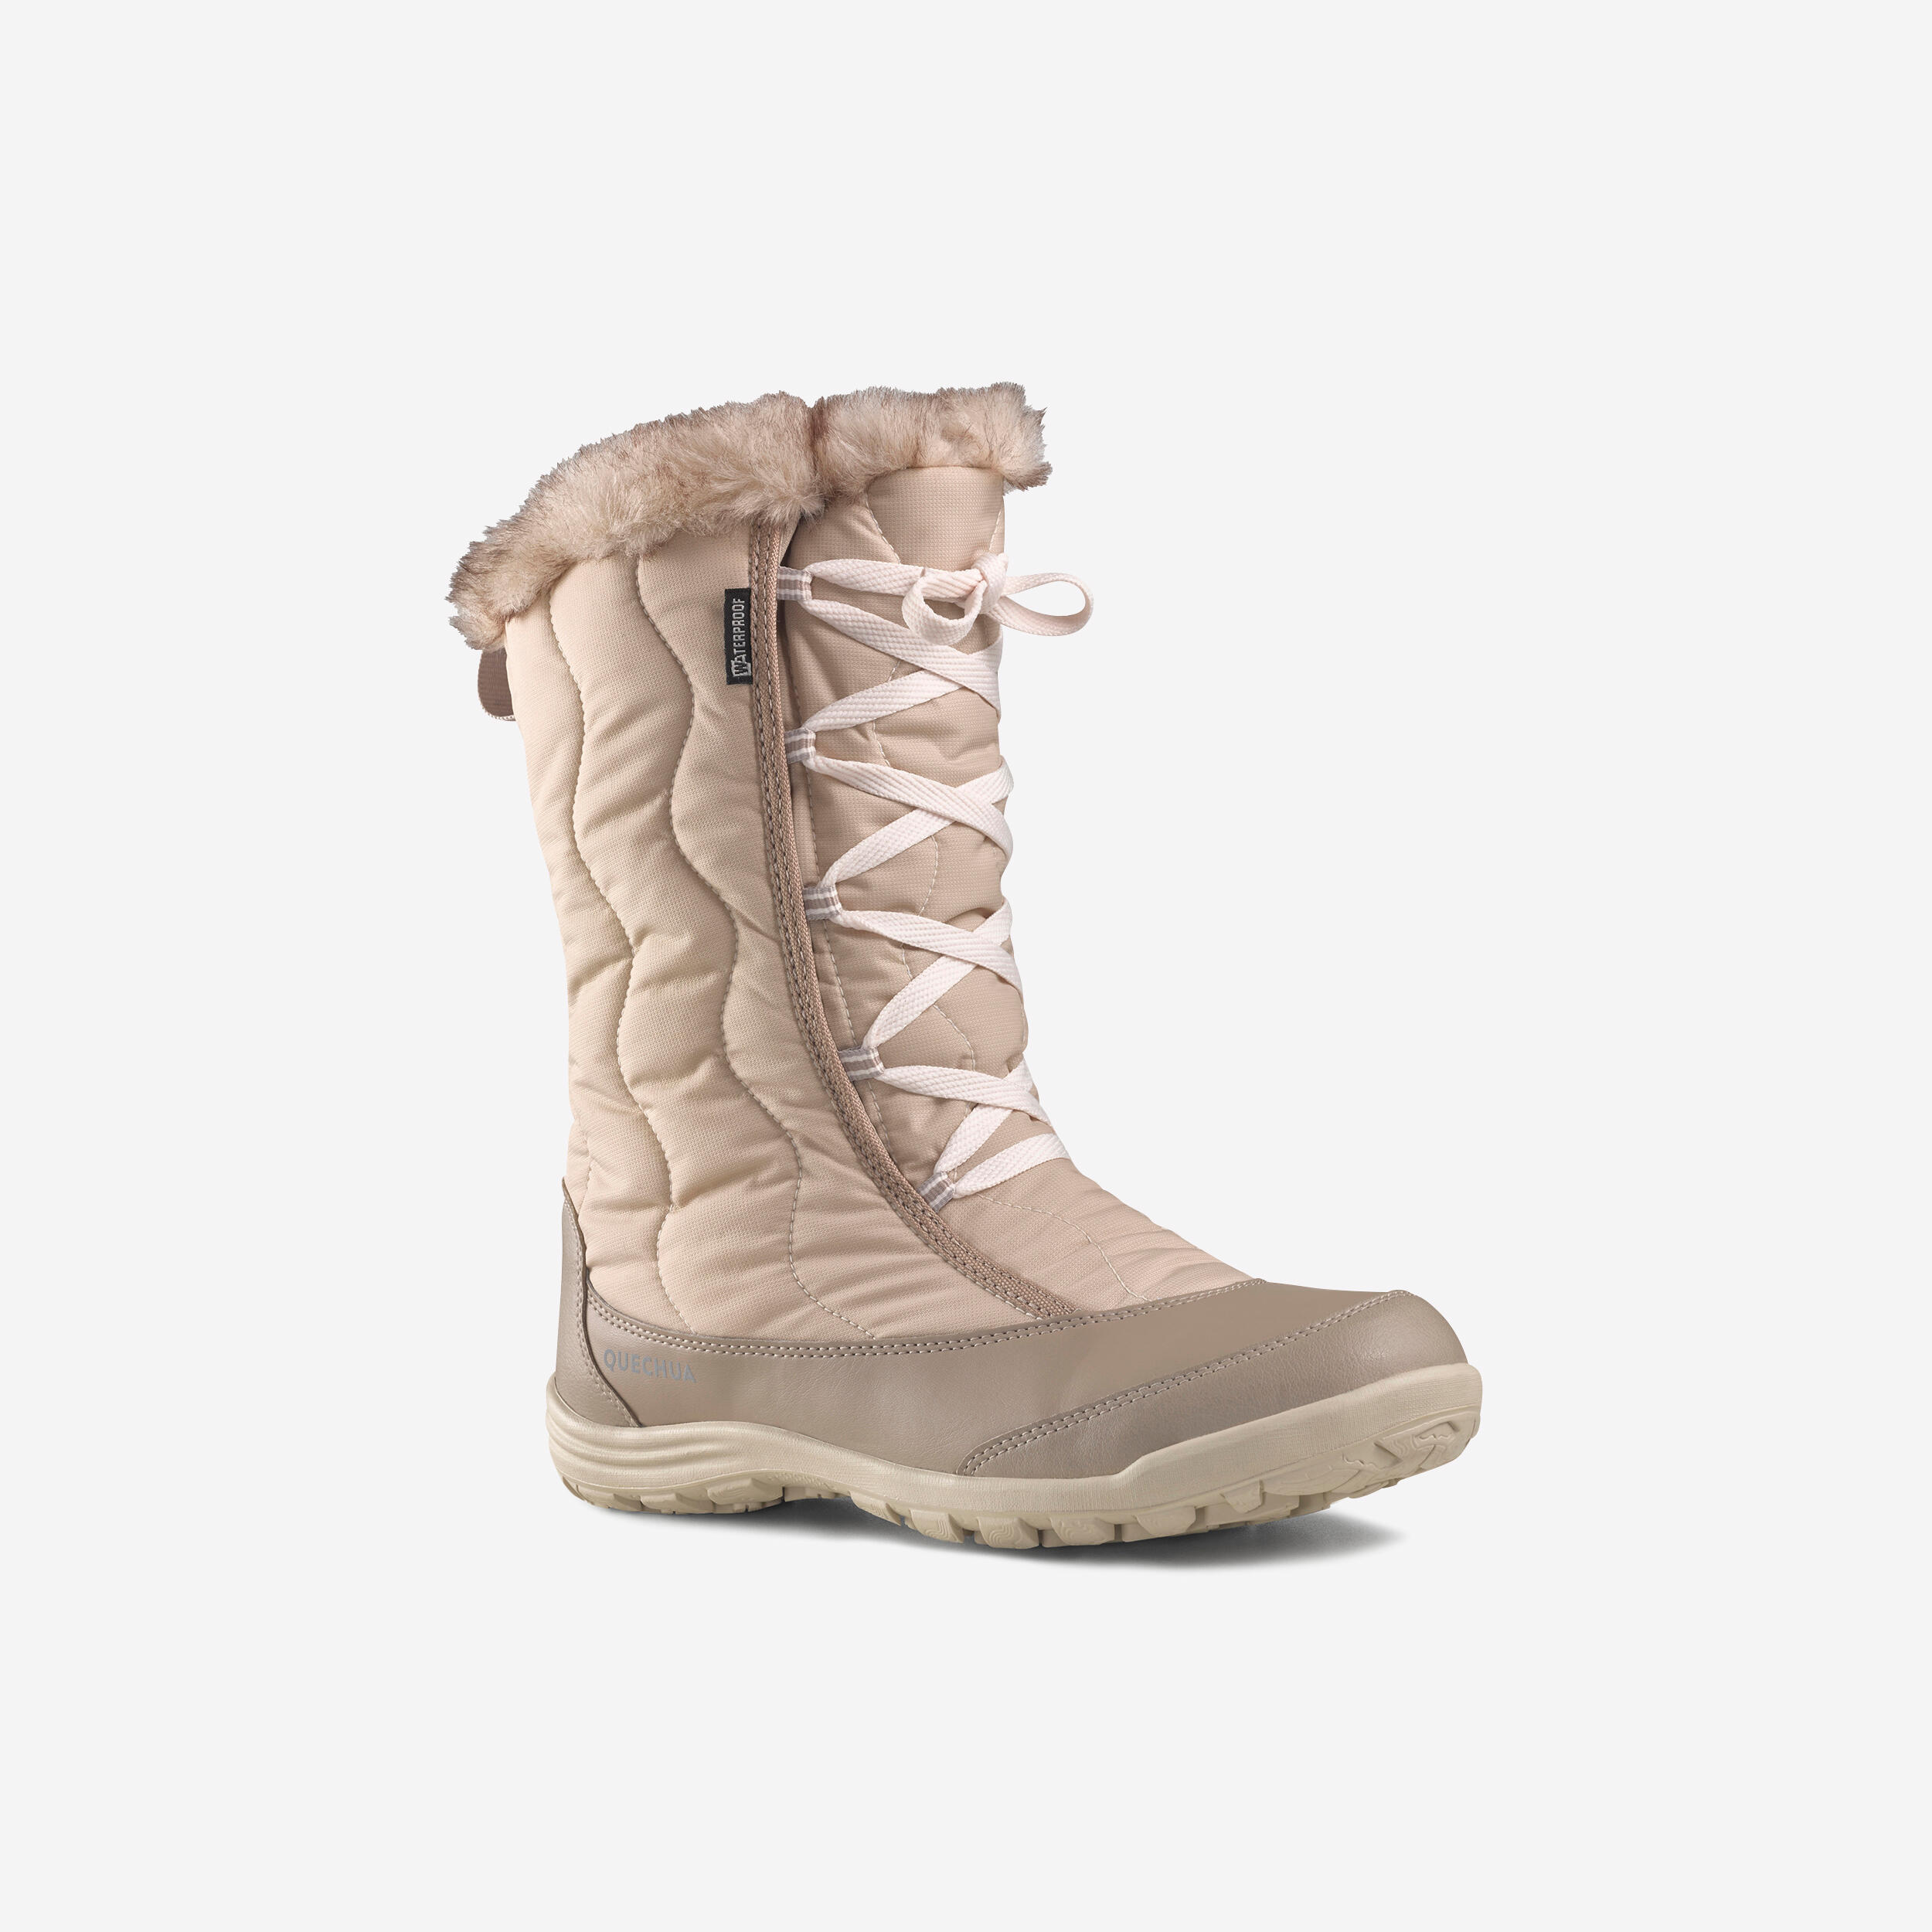 QUECHUA Women's Warm Waterproof Snow Lace-Up Boots - SH500 X-WARM